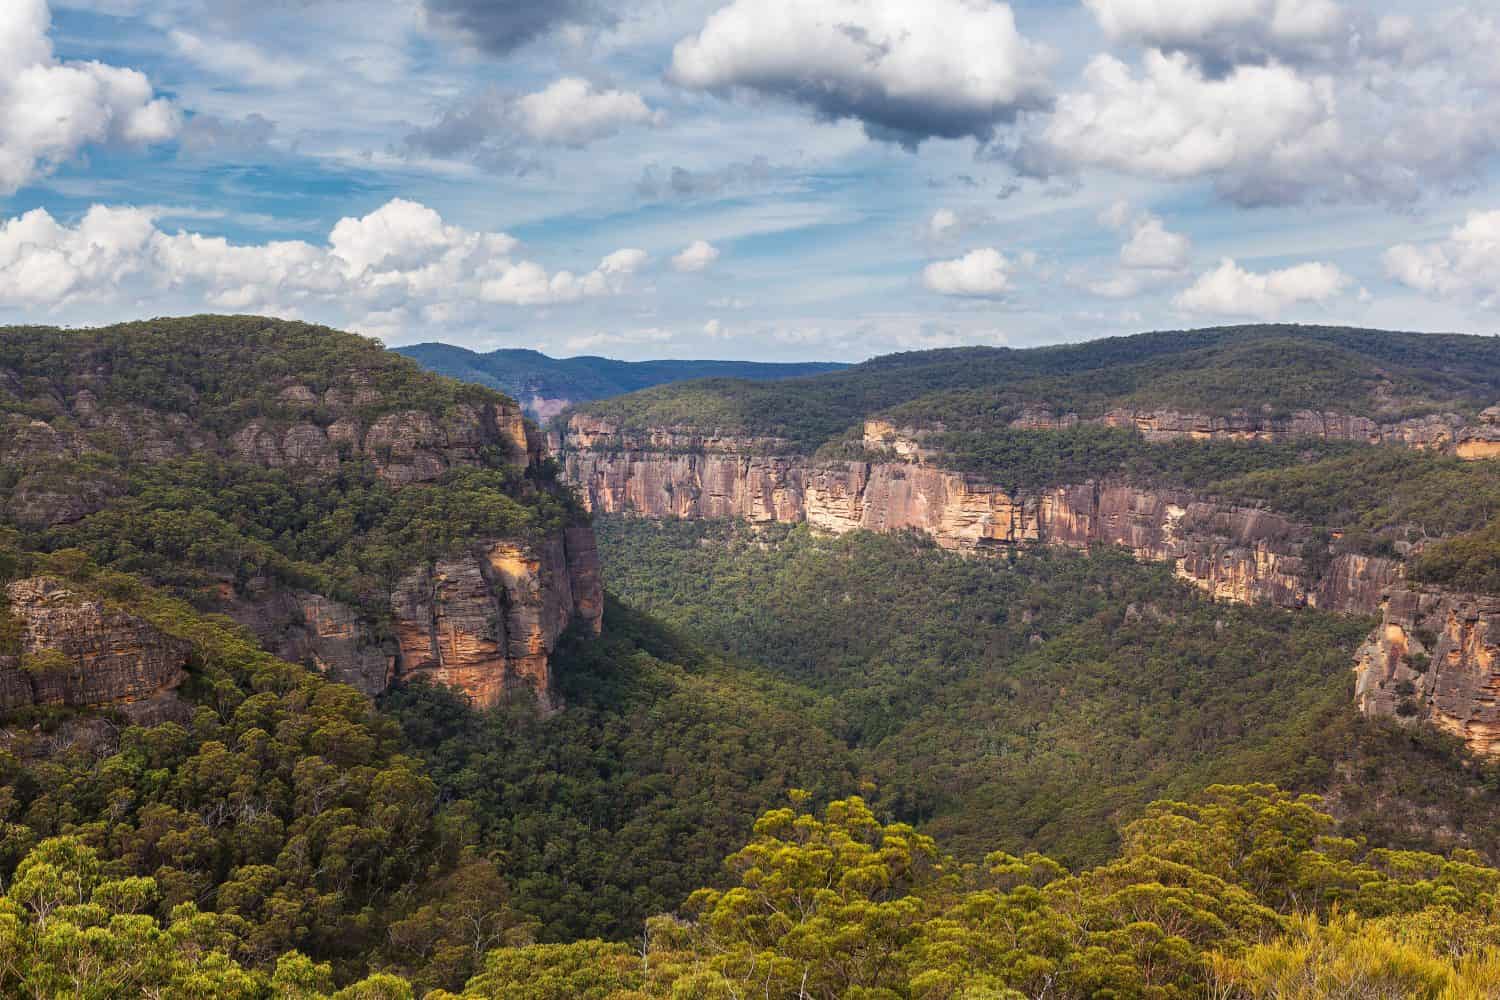 Beautiful rocky landscape of Wollemi National Park, New South Wales, Australia.